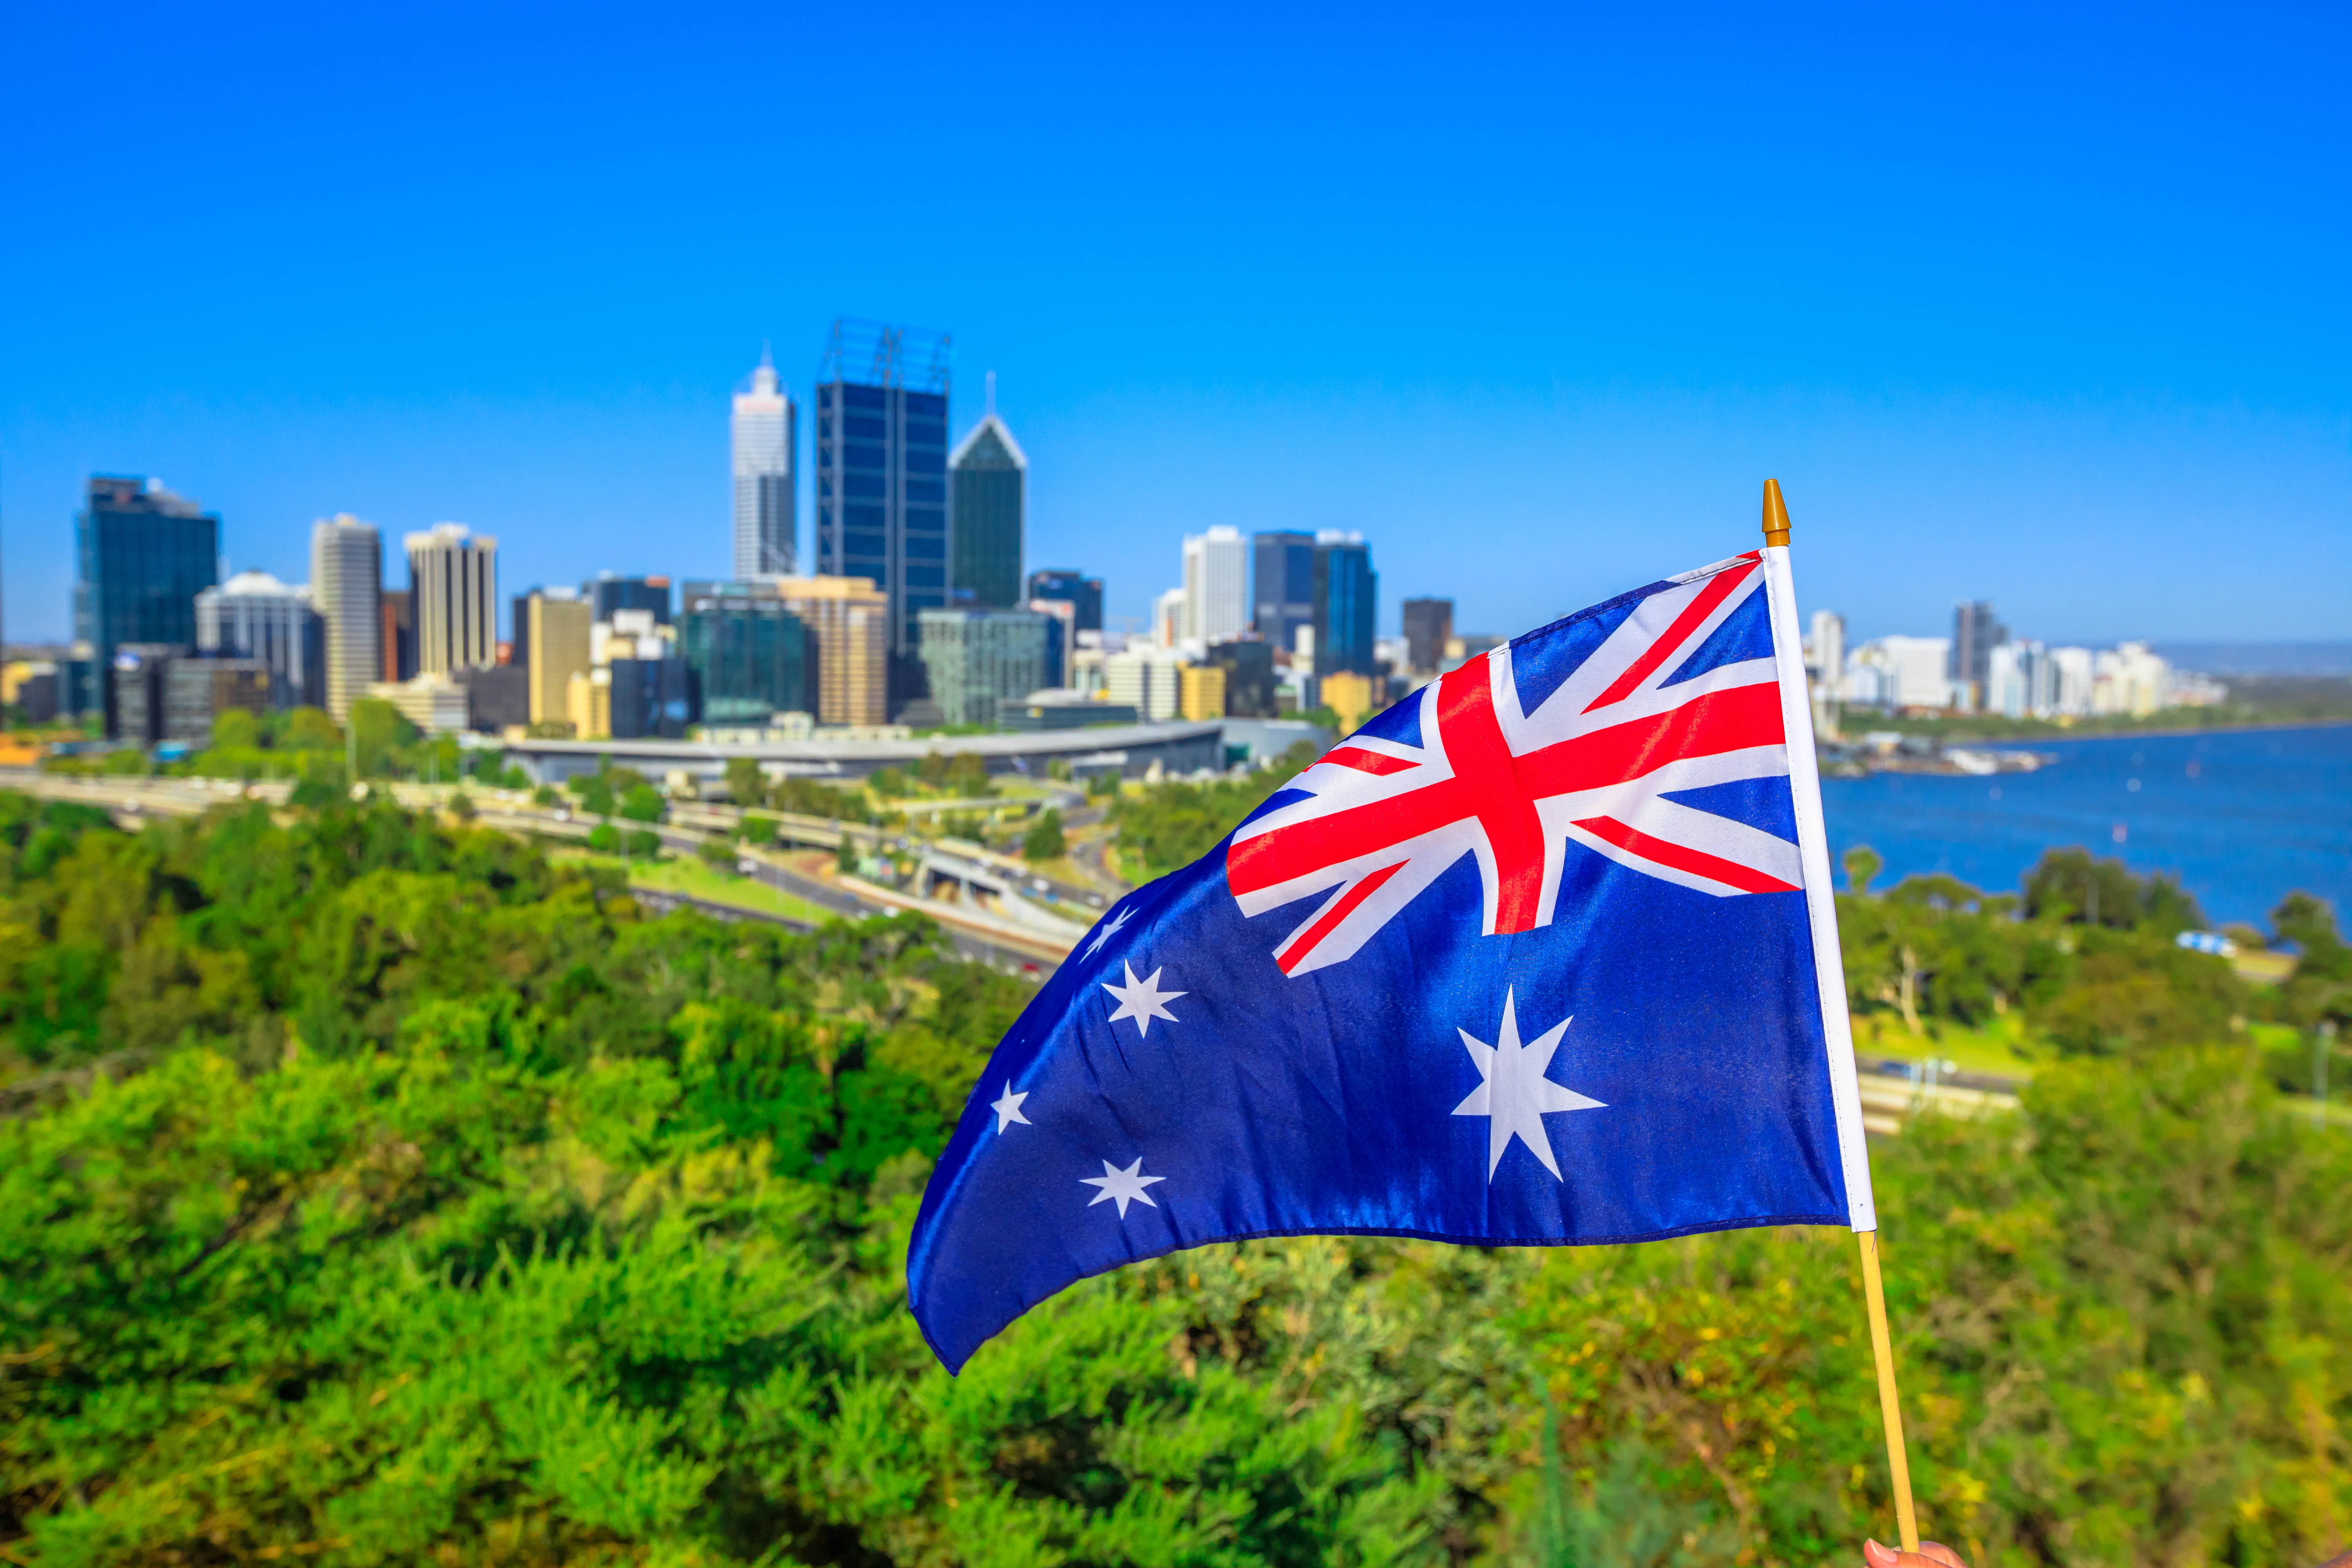 The flag symbolizes Australian citizenship